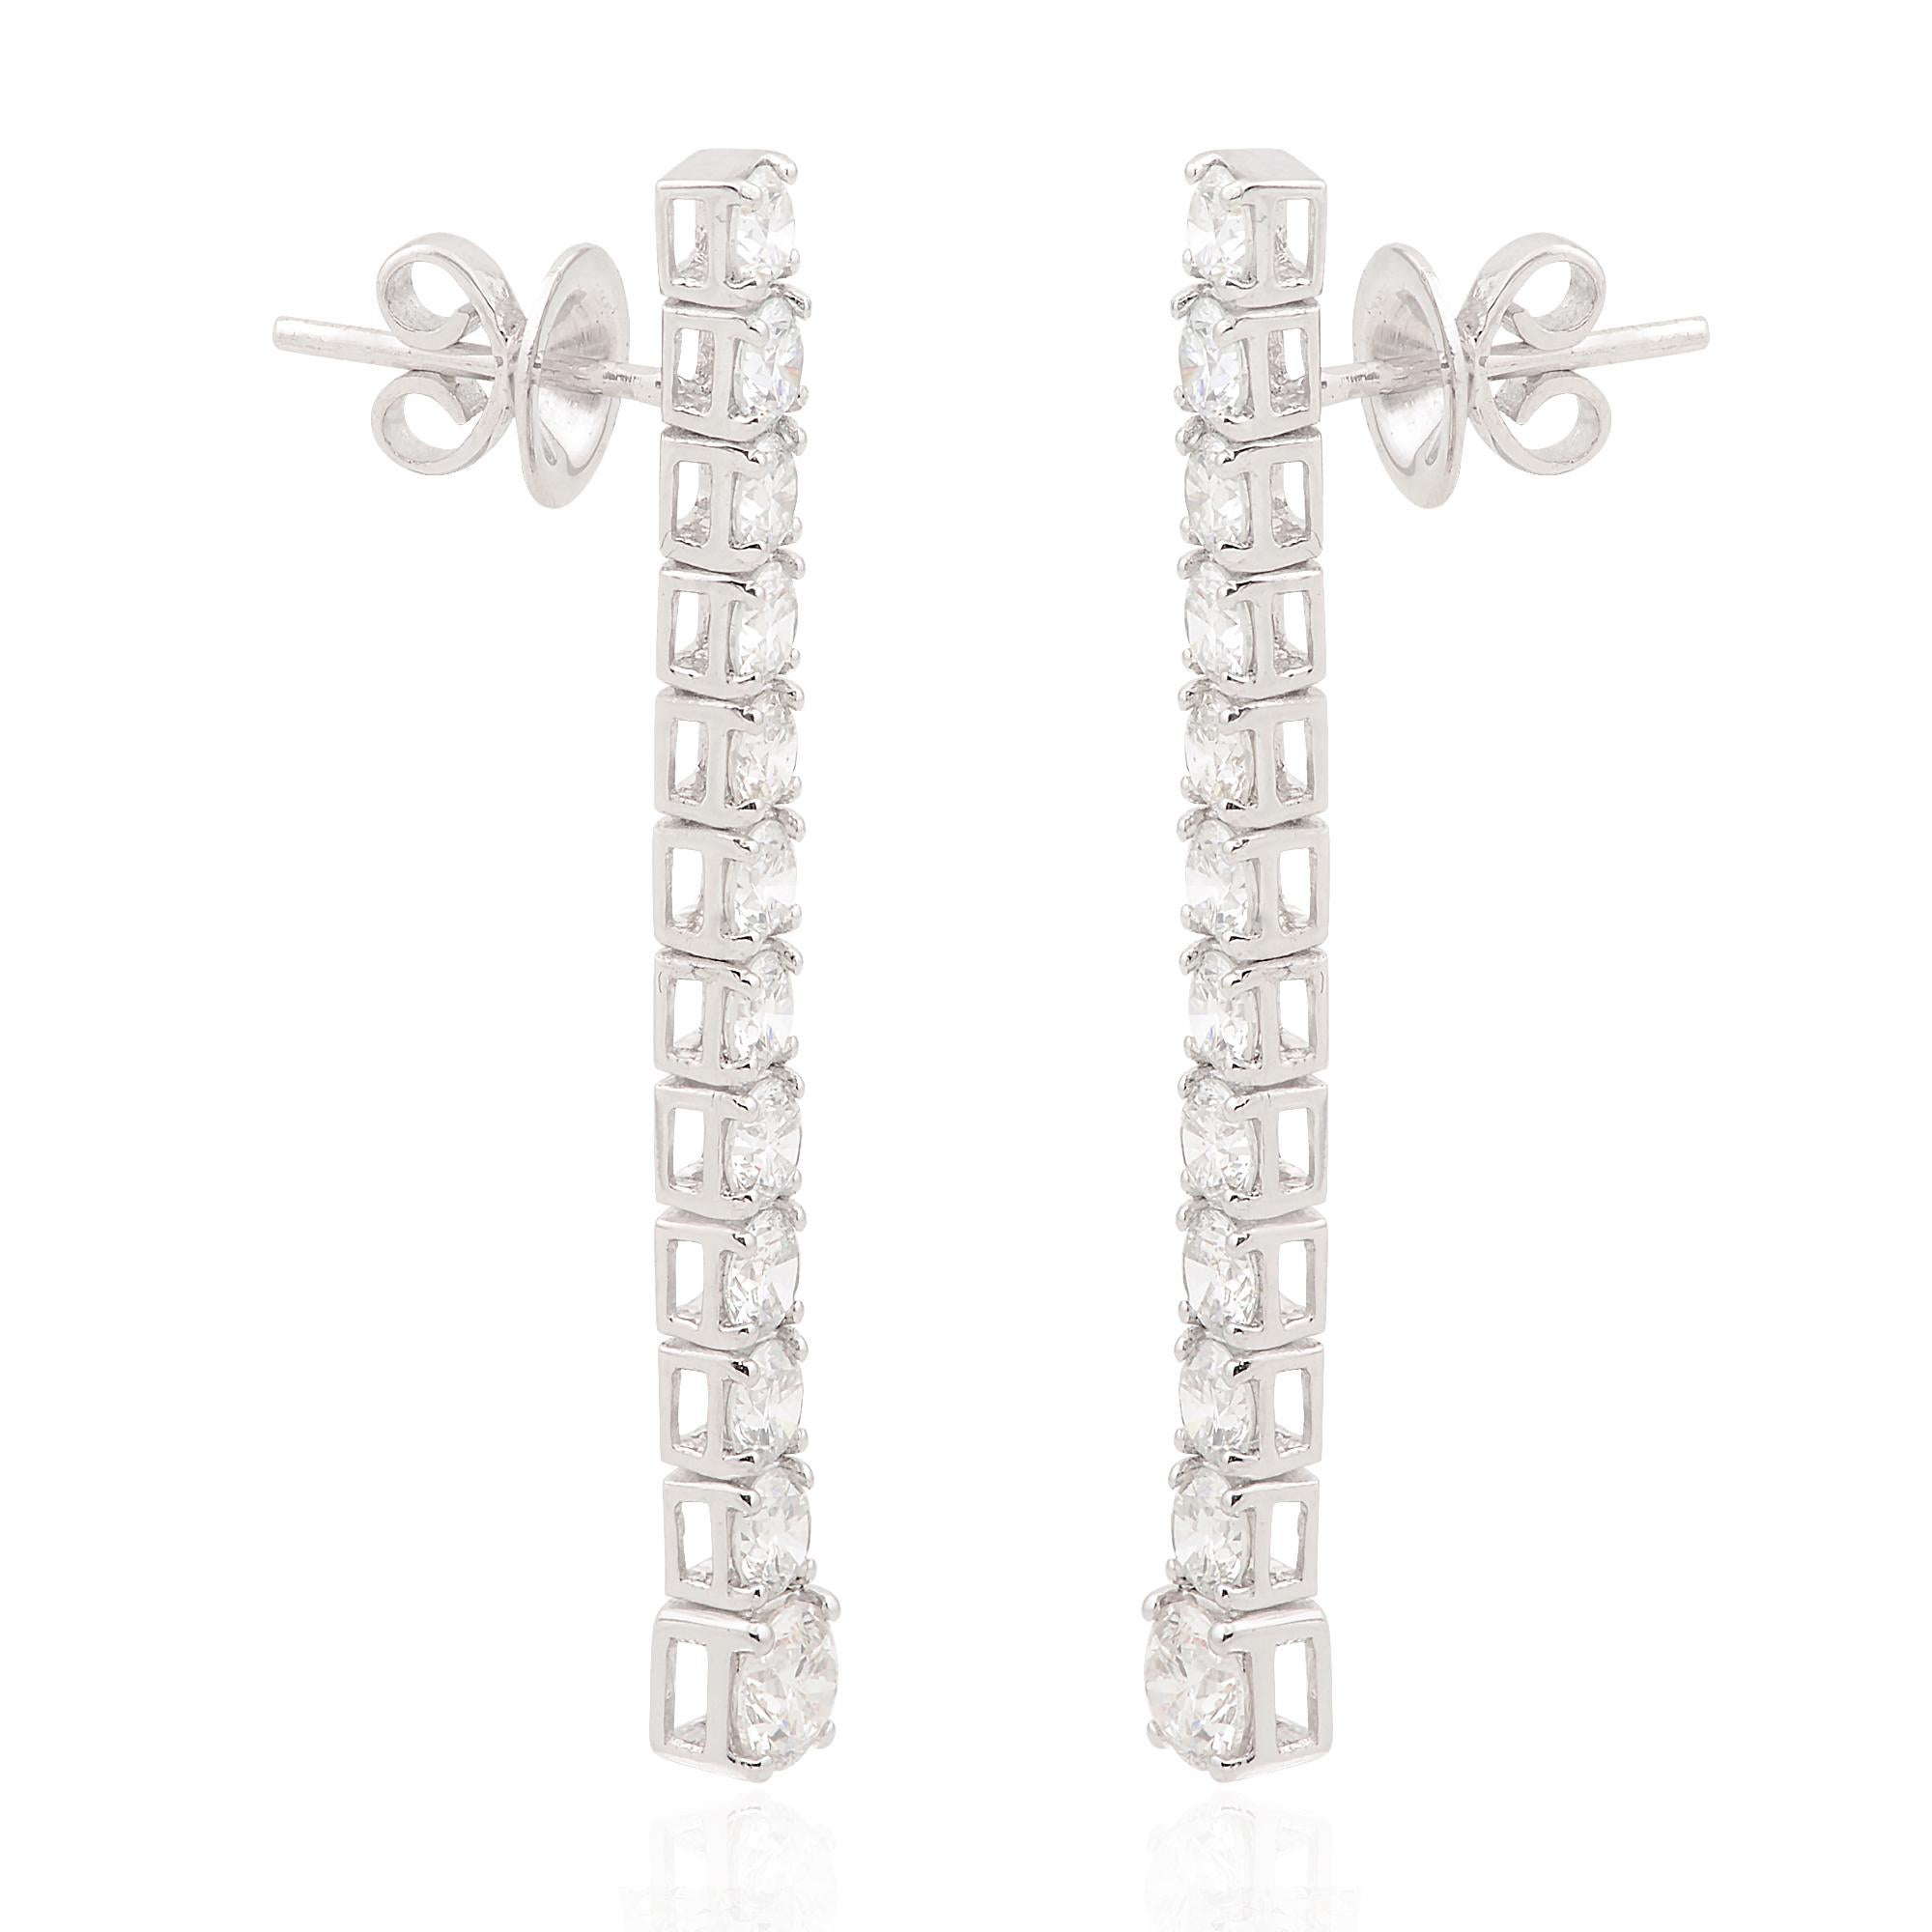 3.30 Carat Diamond Bar Dangle Earrings Solid 18k White Gold Handmade Jewelry New Pour femmes en vente